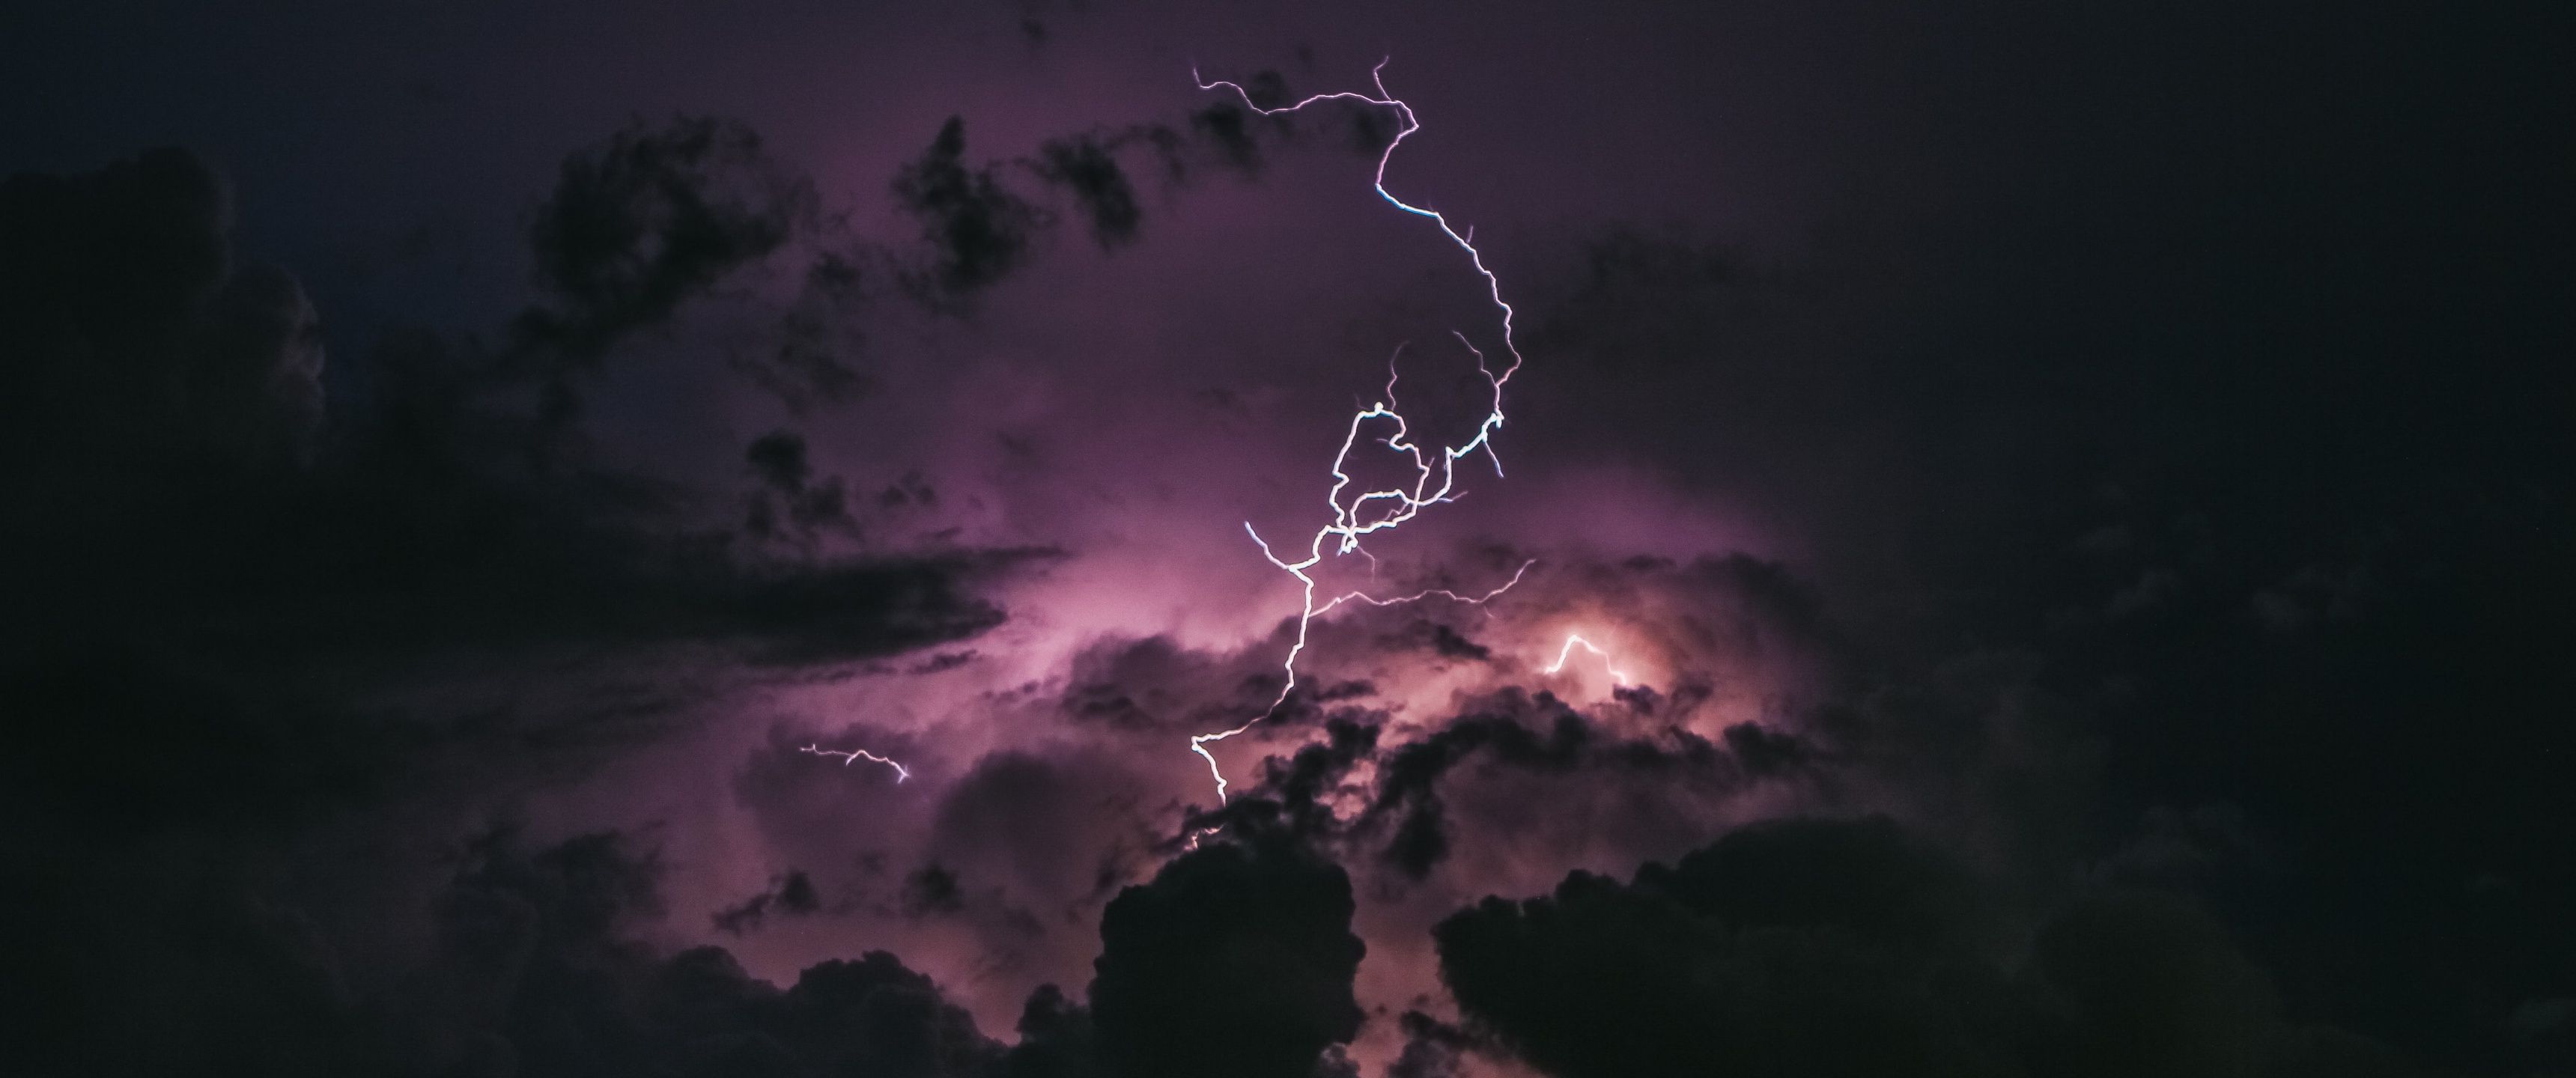 A purple lightning bolt is seen in the sky - Lightning